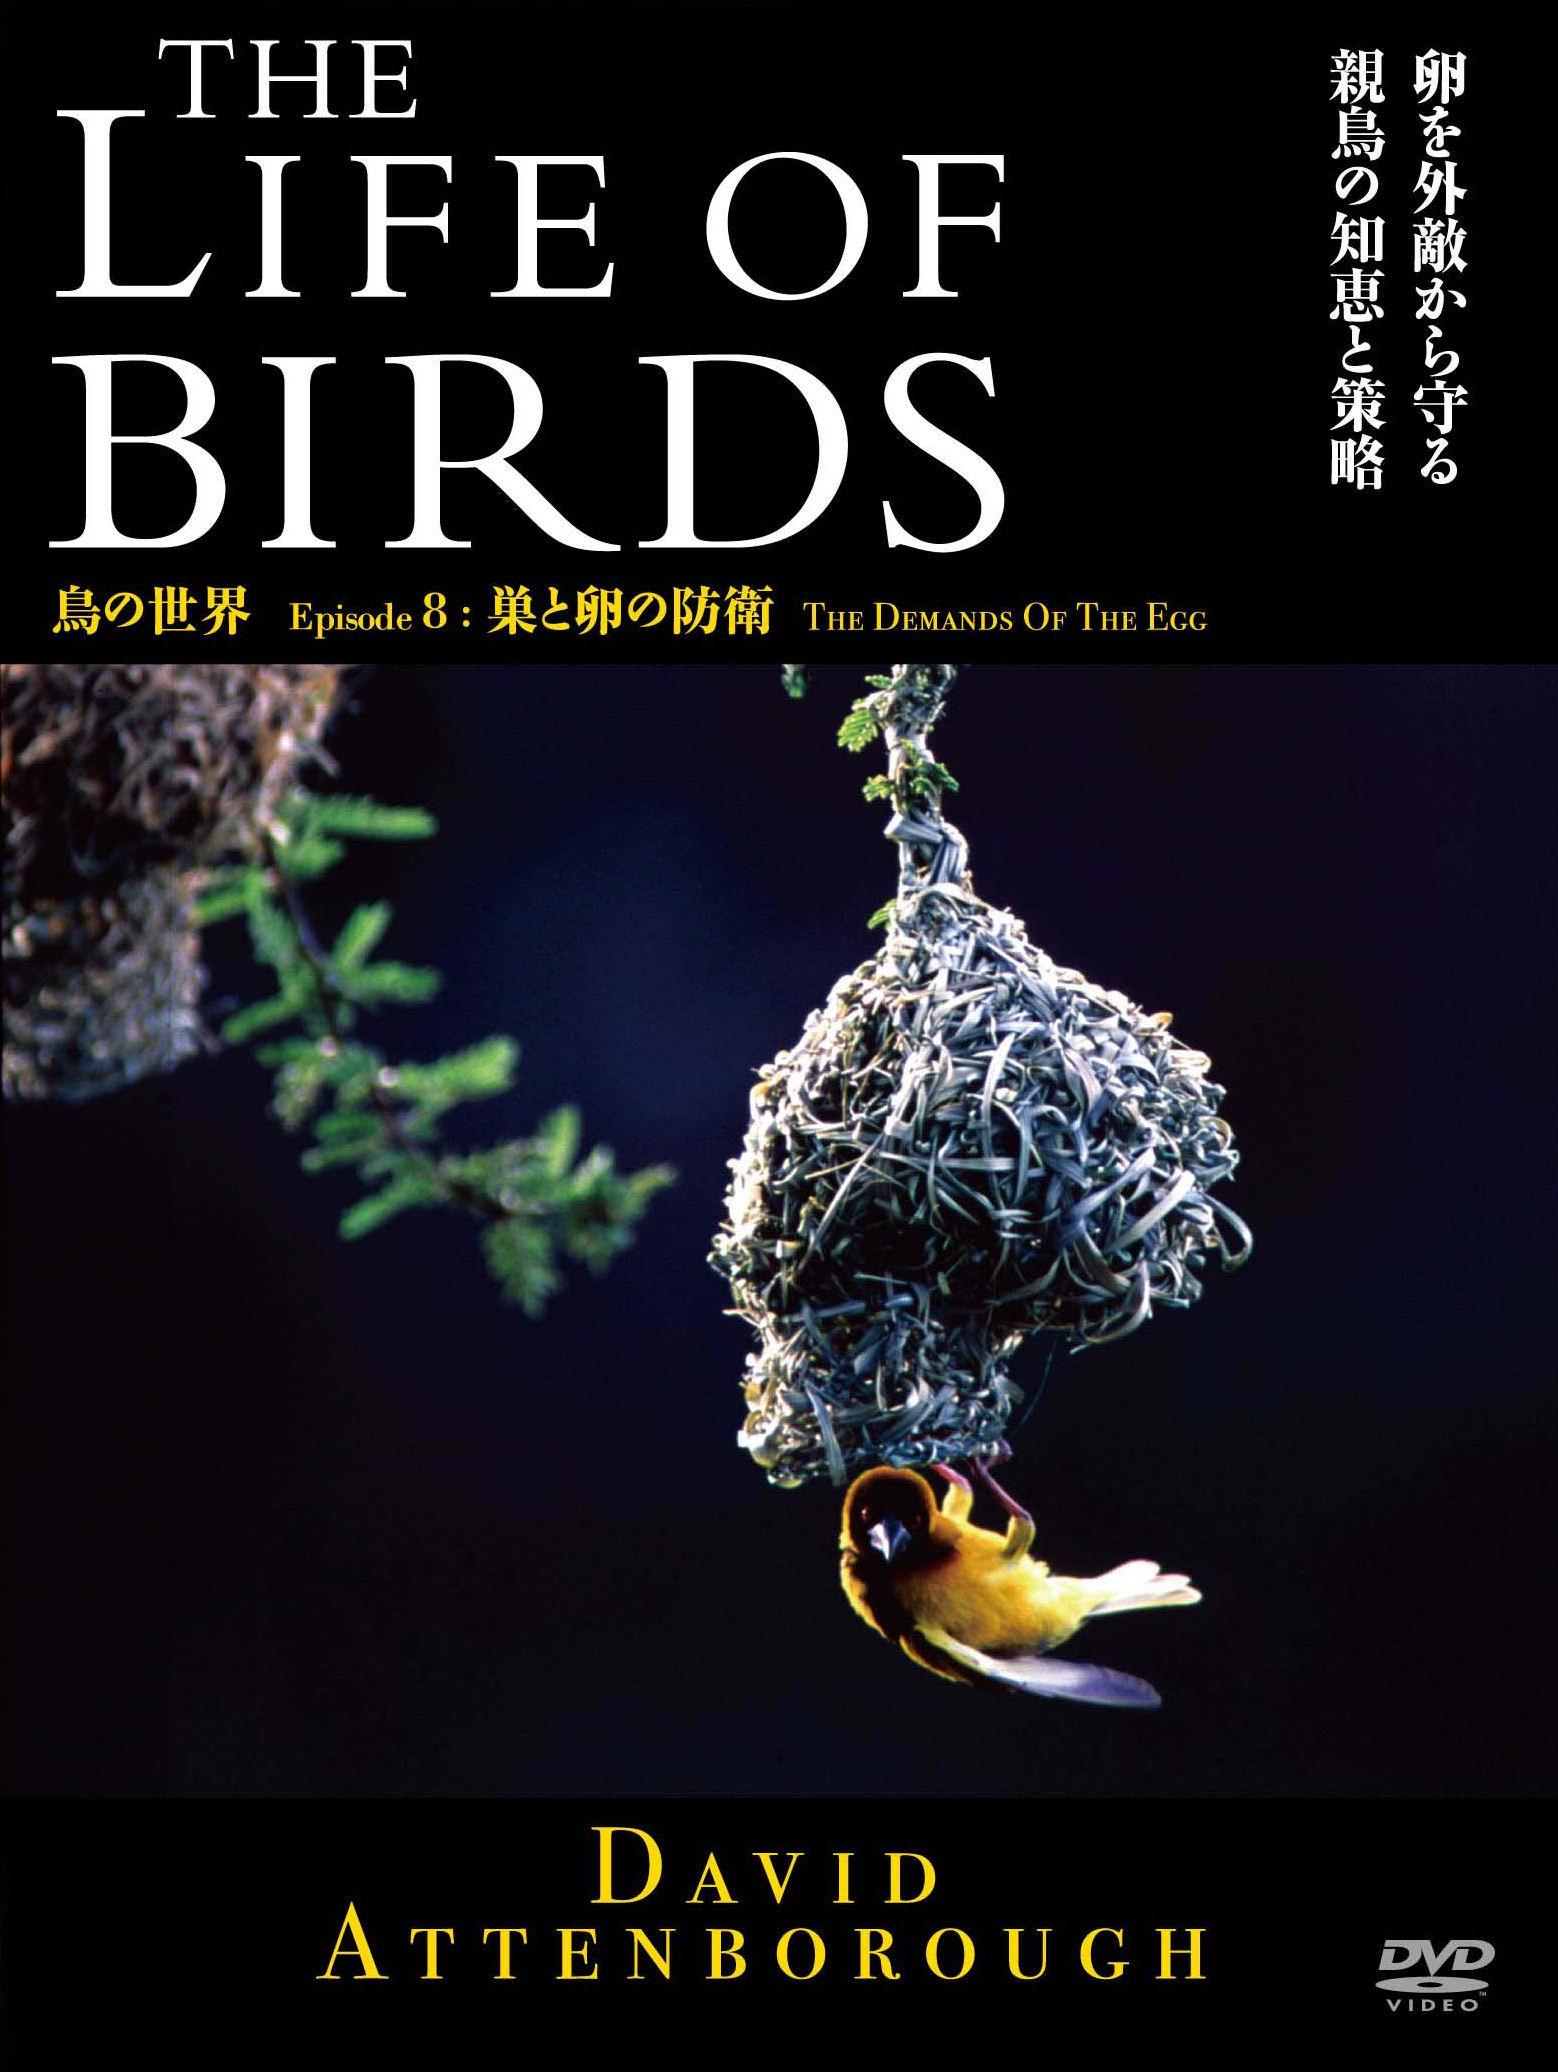 THE LIFE OF BIRDS 鳥の世界 巣と卵の防衛 のサムネイル画像